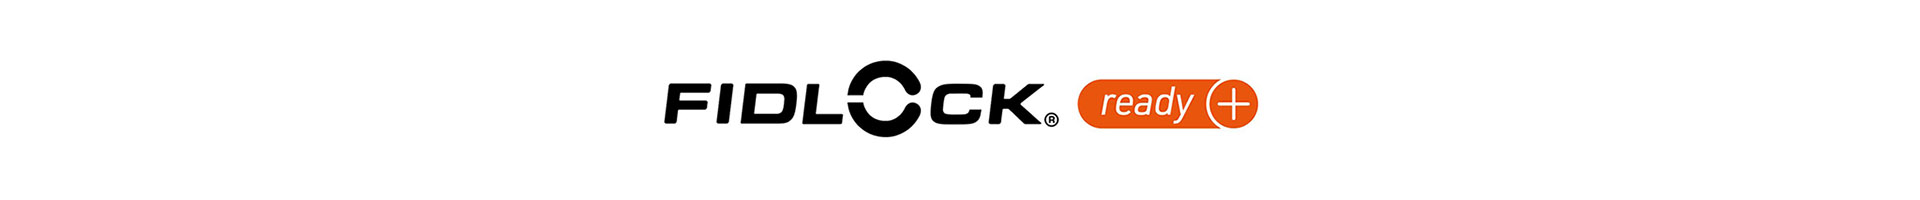 FIDLOCK ready Logo